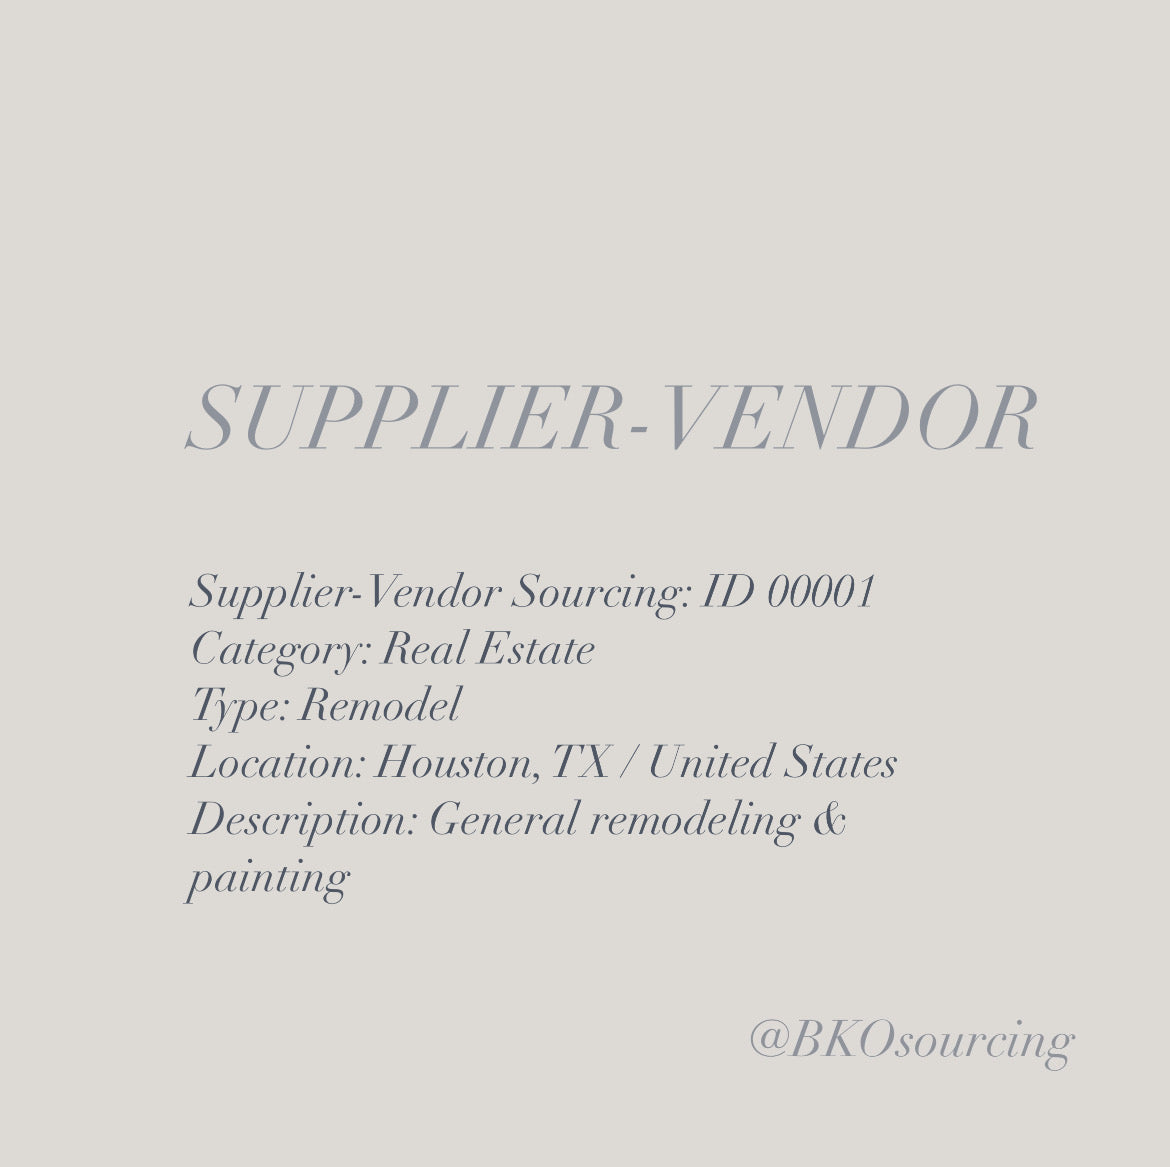 Supplier-Vendor Sourcing 00001 - Real Estate - Remodel - USA - General remodel and painting - 2023-16DEC